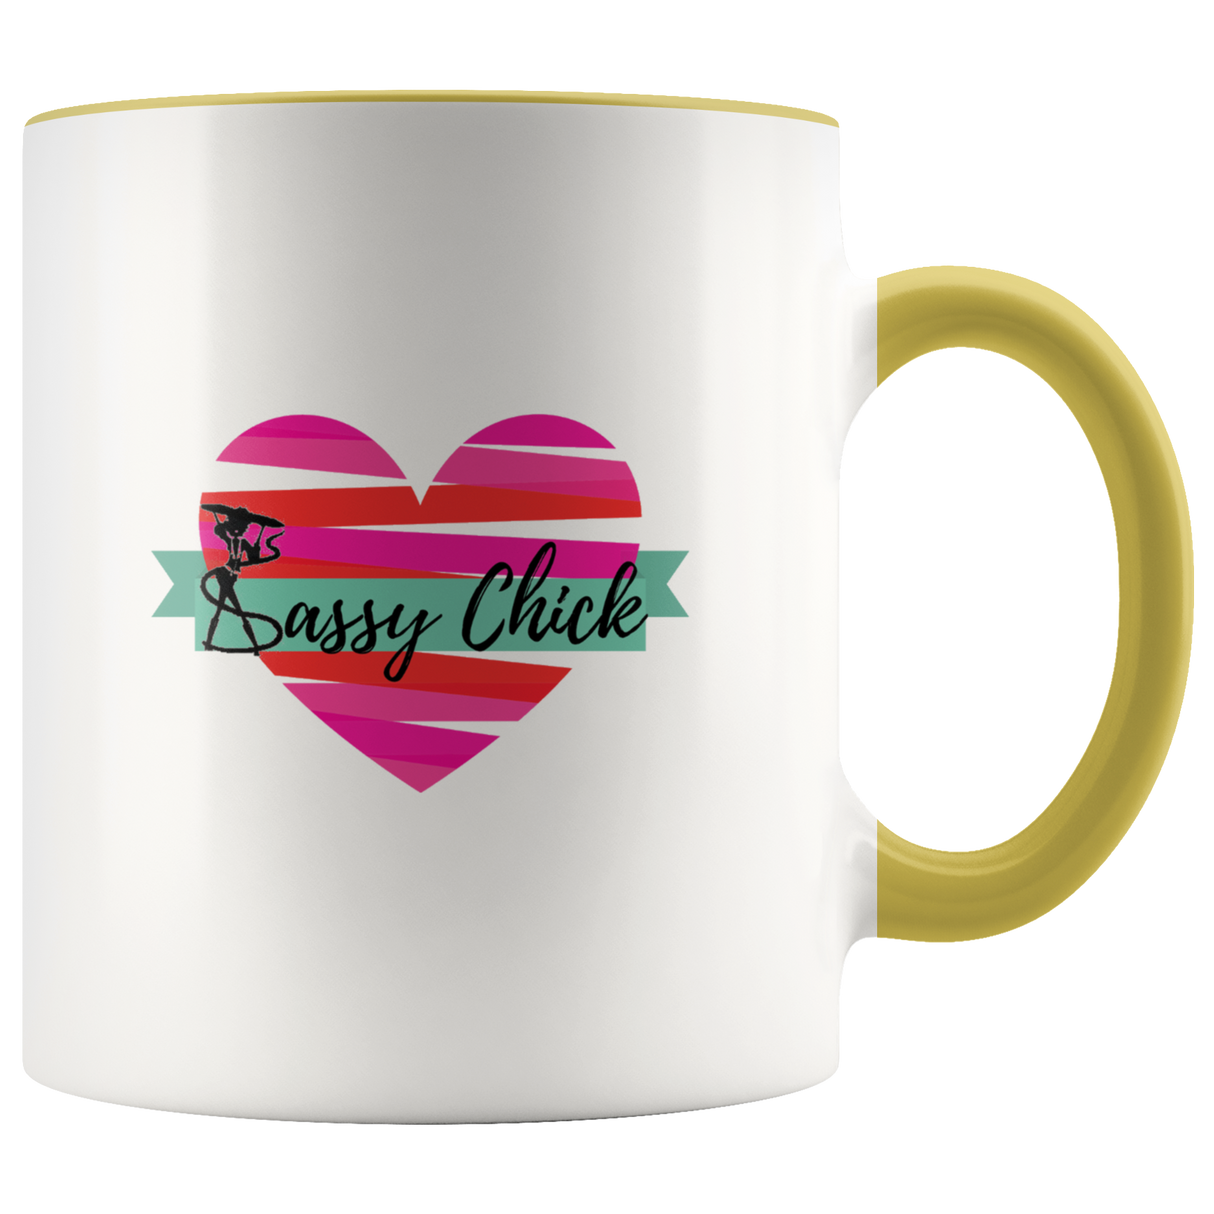 Sassy Heart Mug - Shop Sassy Chick 